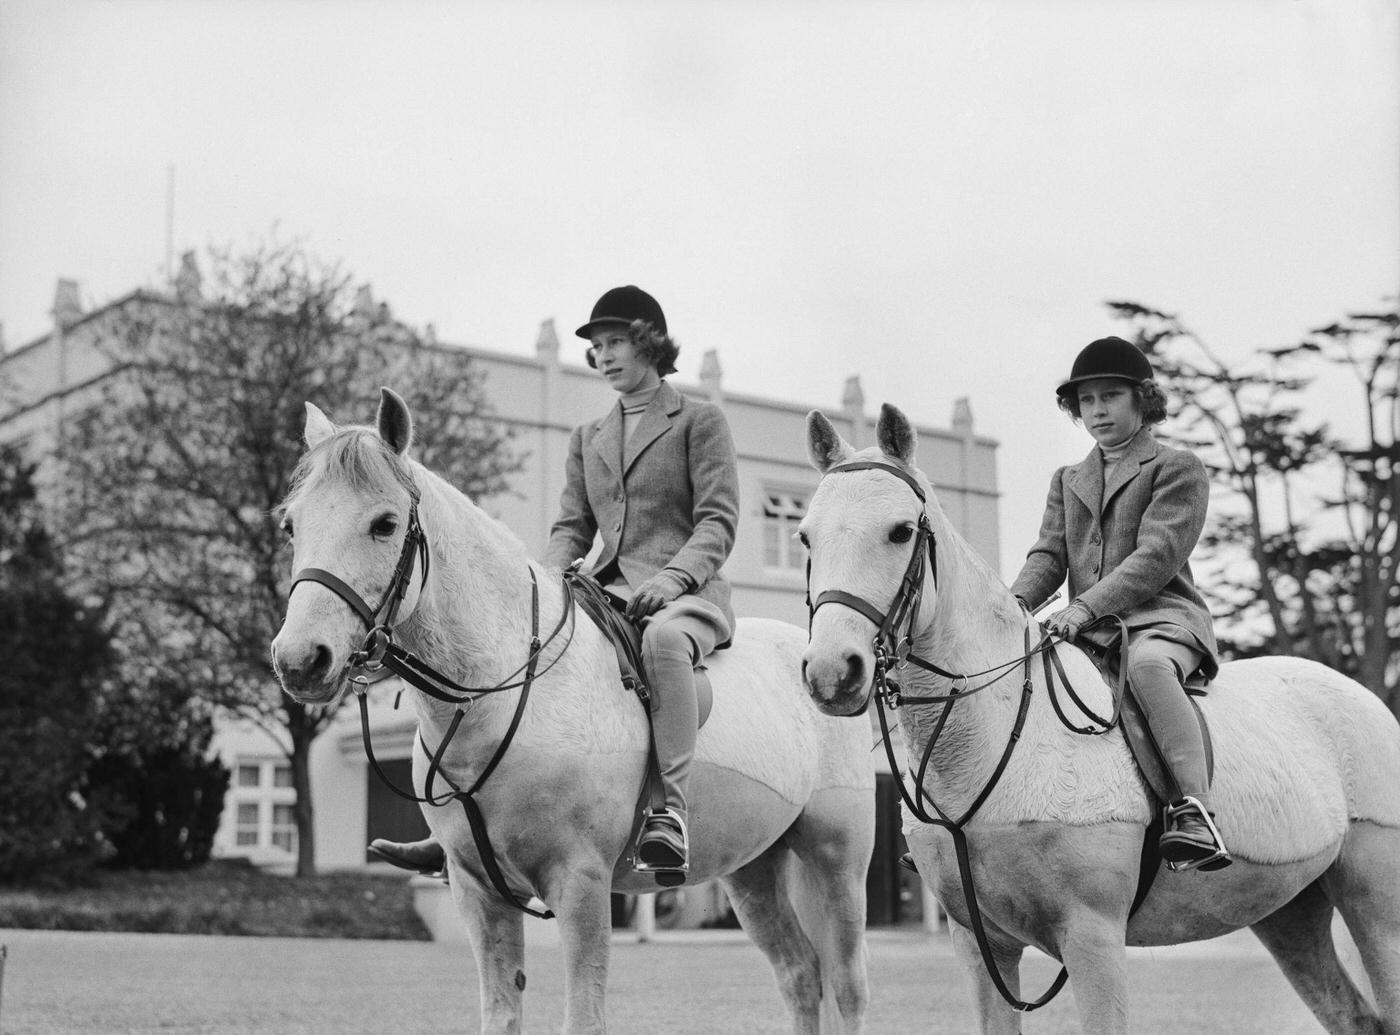 The Royal Princesses Elizabeth and Margaret riding horses, UK, 1940.